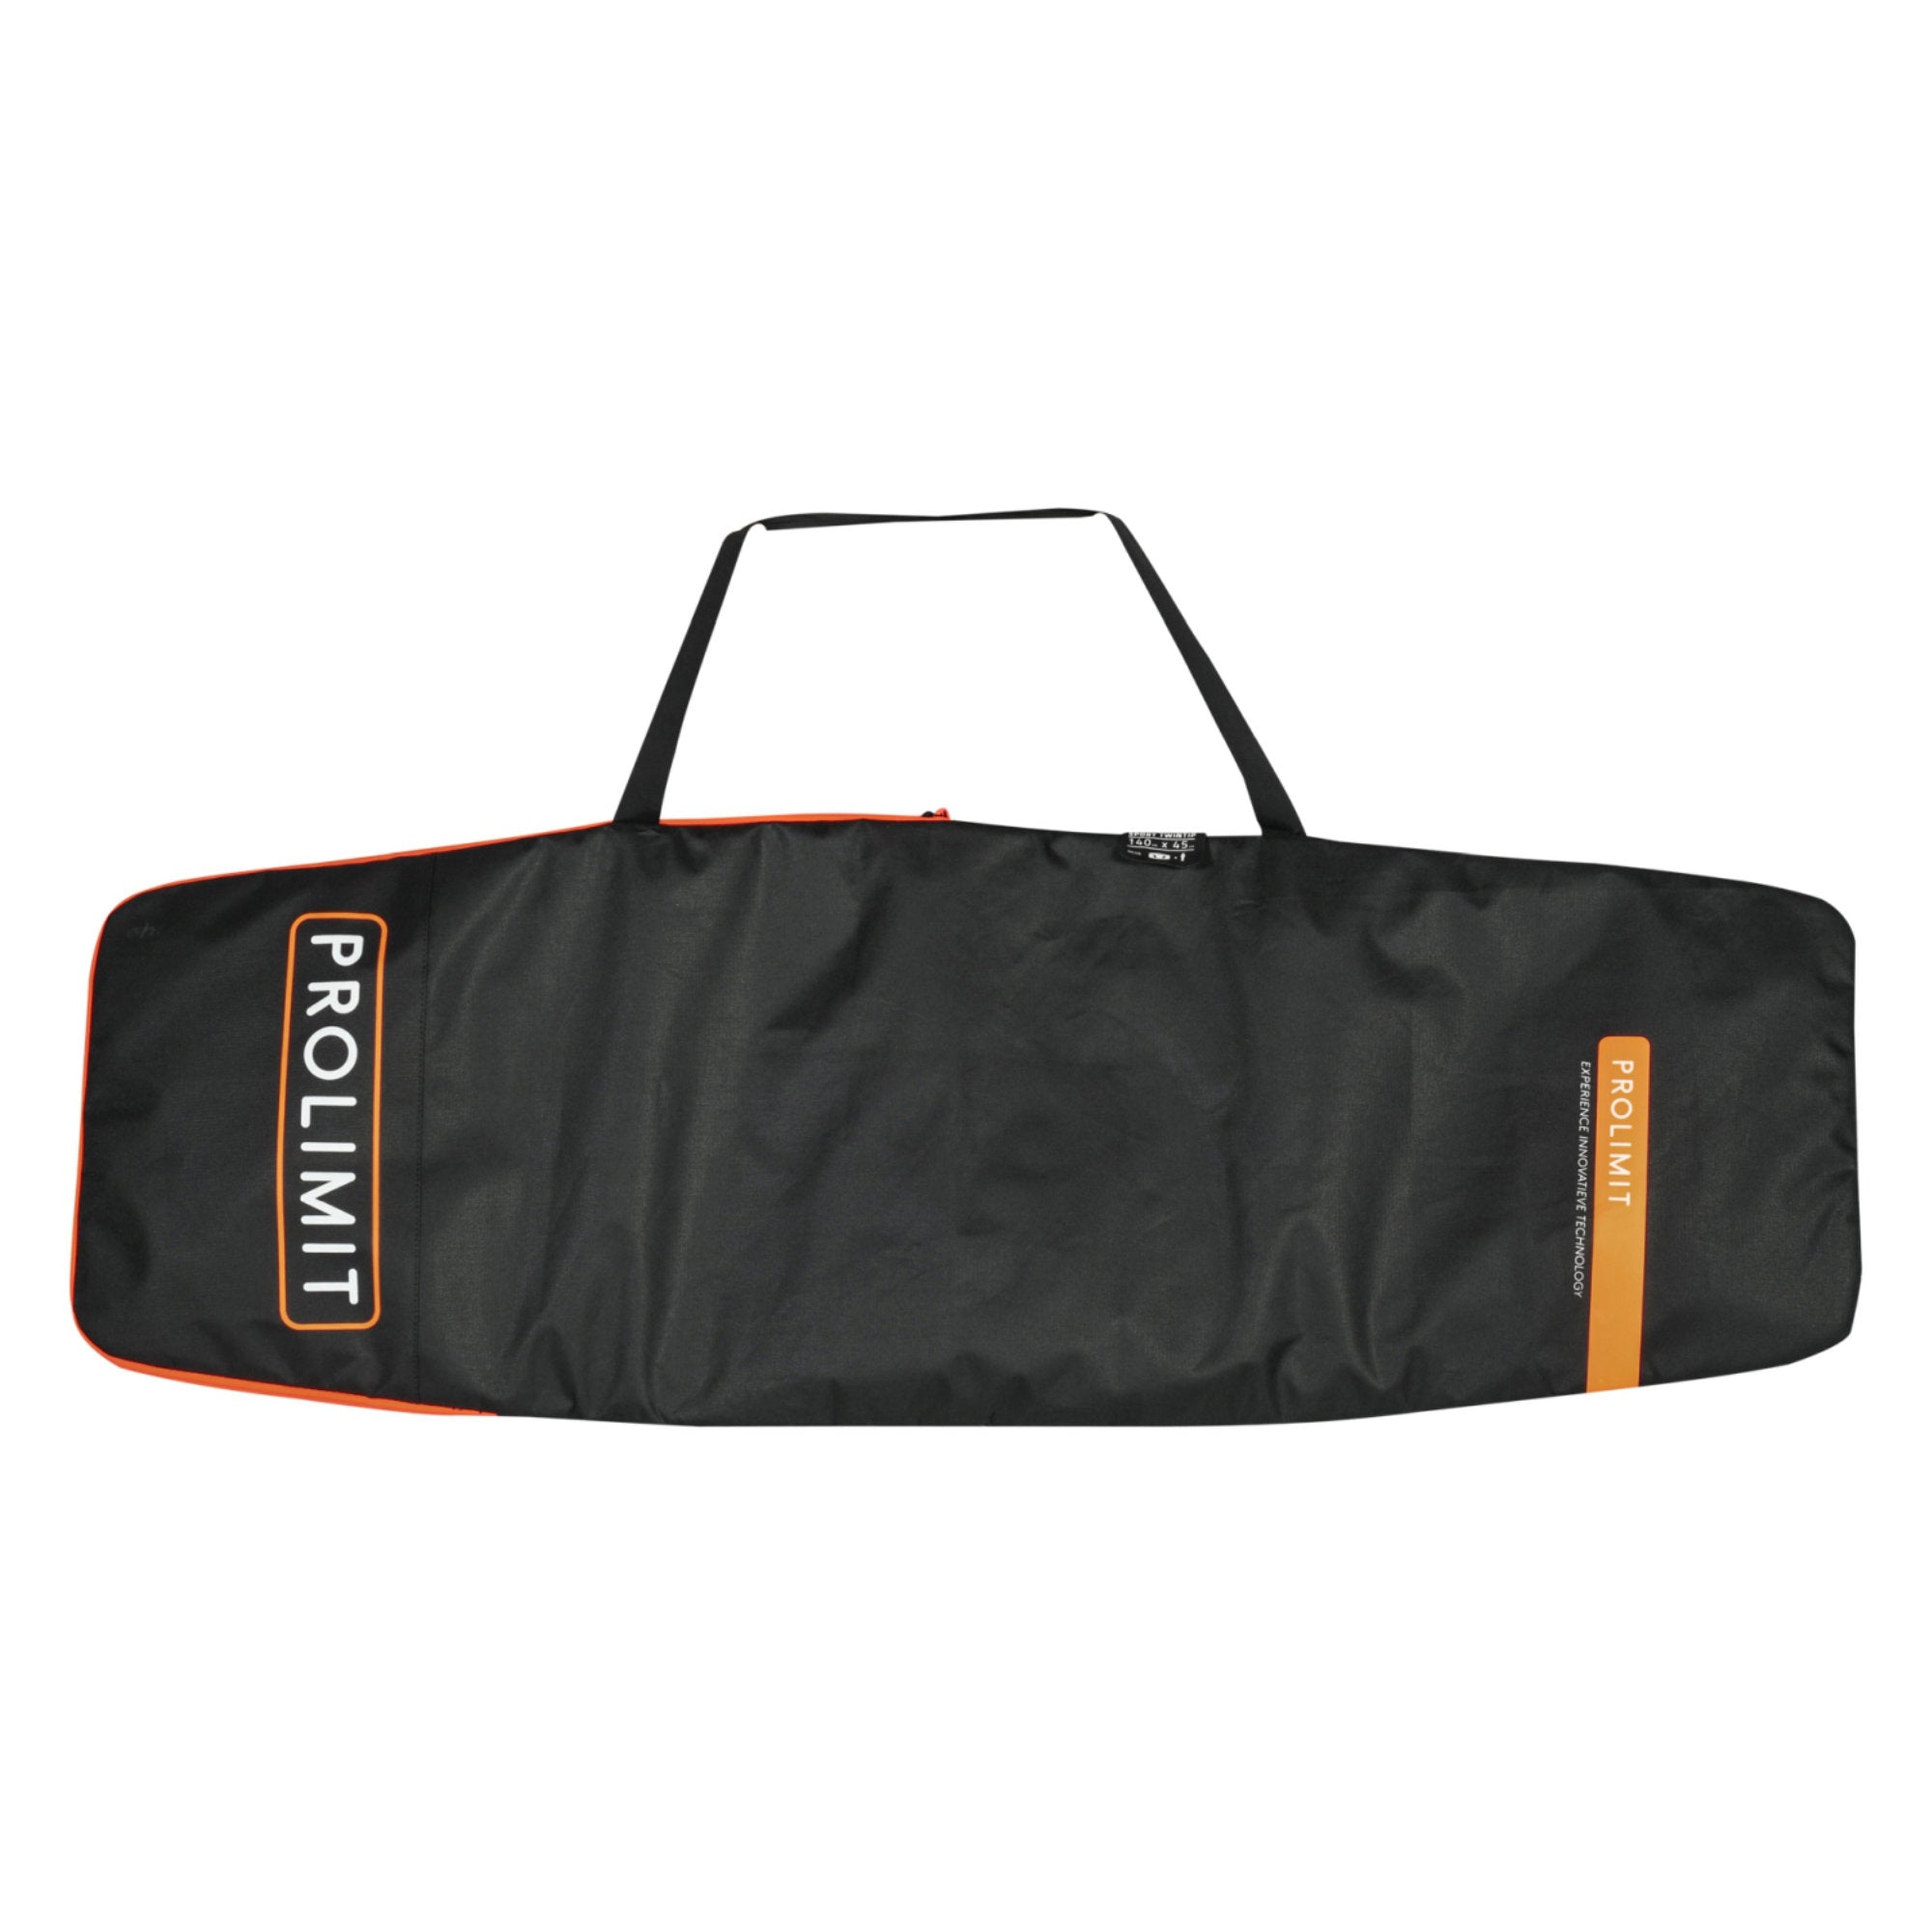 Kitesurf Boardbag TT Sport schwarz/orange